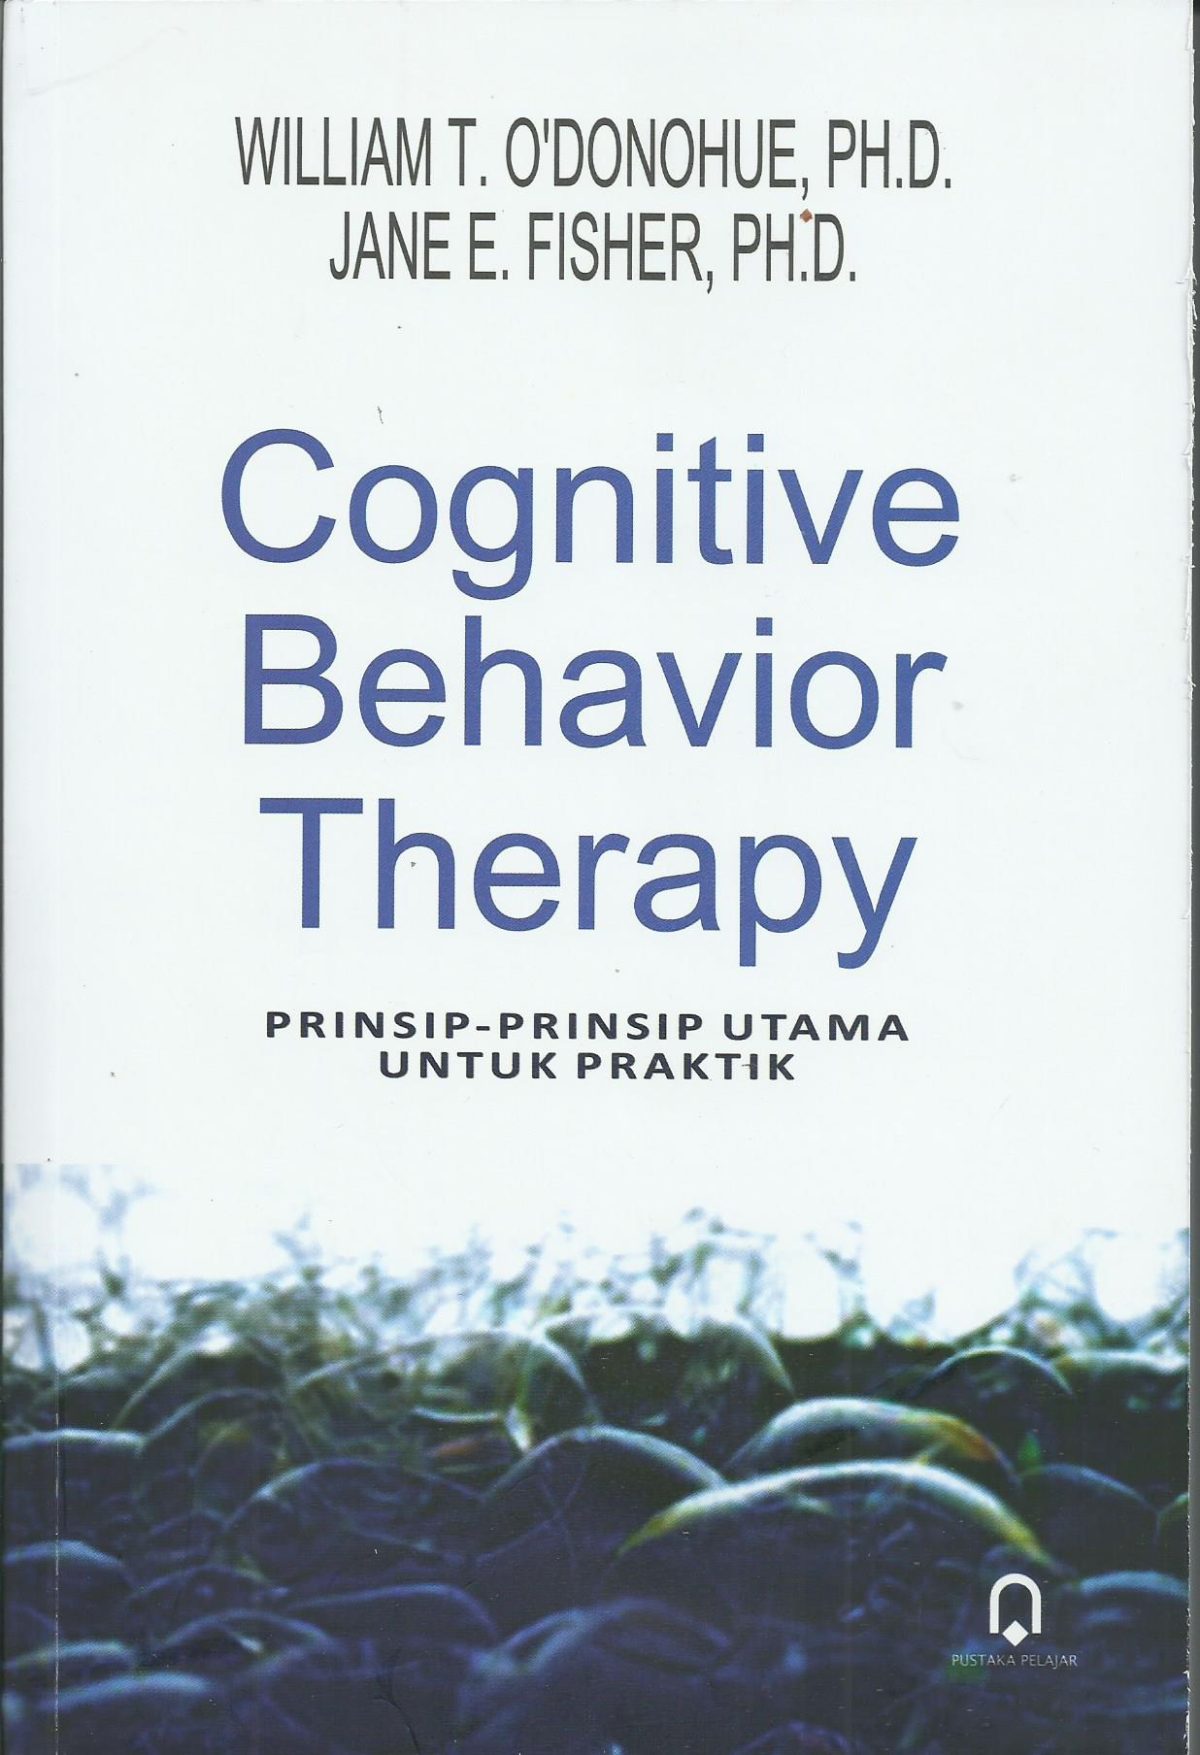 Cognitive Behavior Therapy (Prinsip-Prinsip Utama Untuk Praktik)